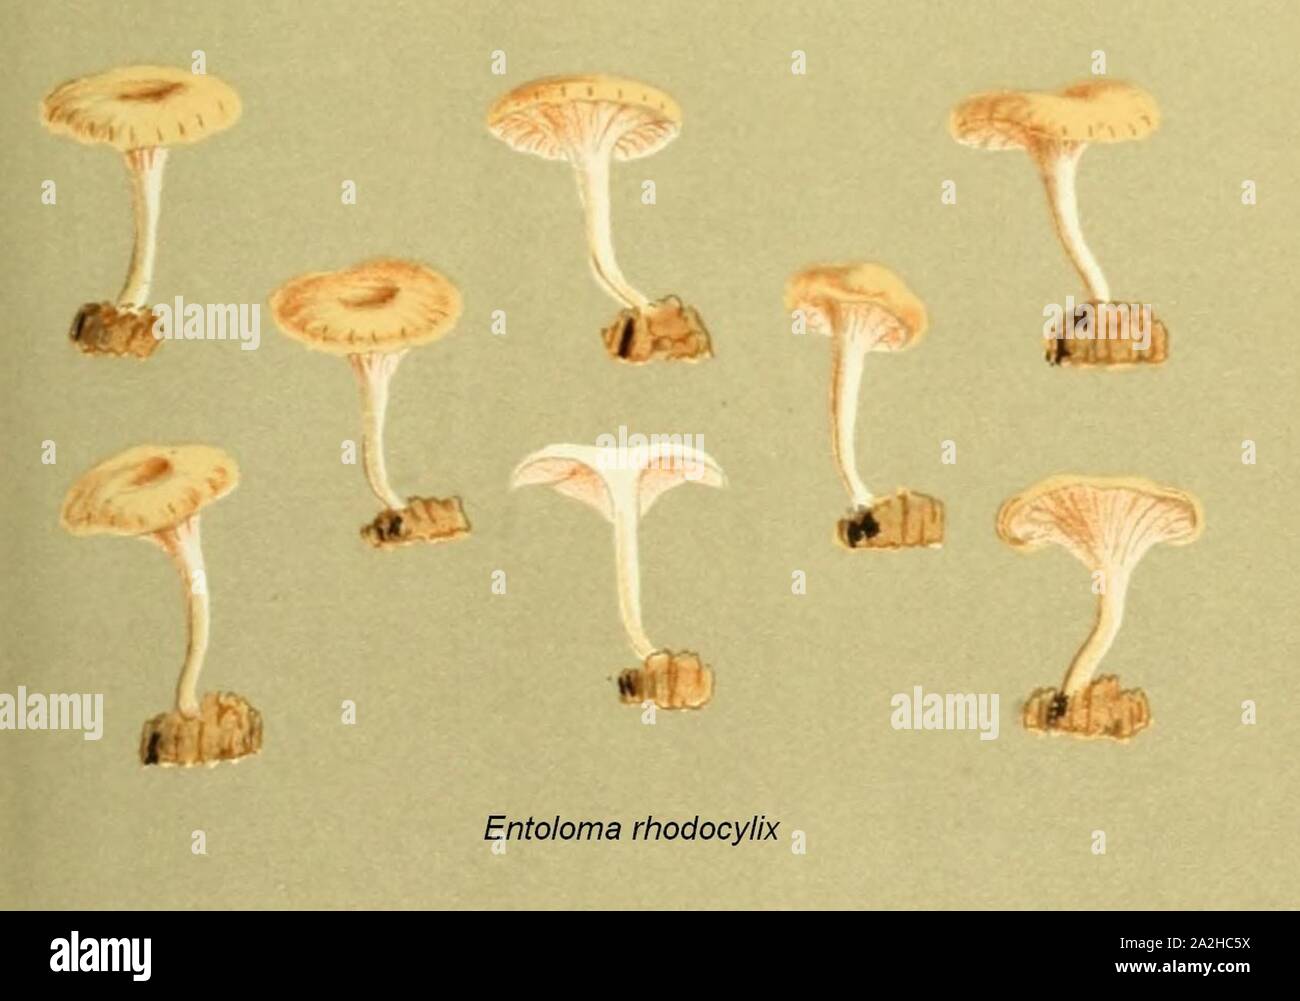 Entoloma rhodocylix ilustr. Stock Photo